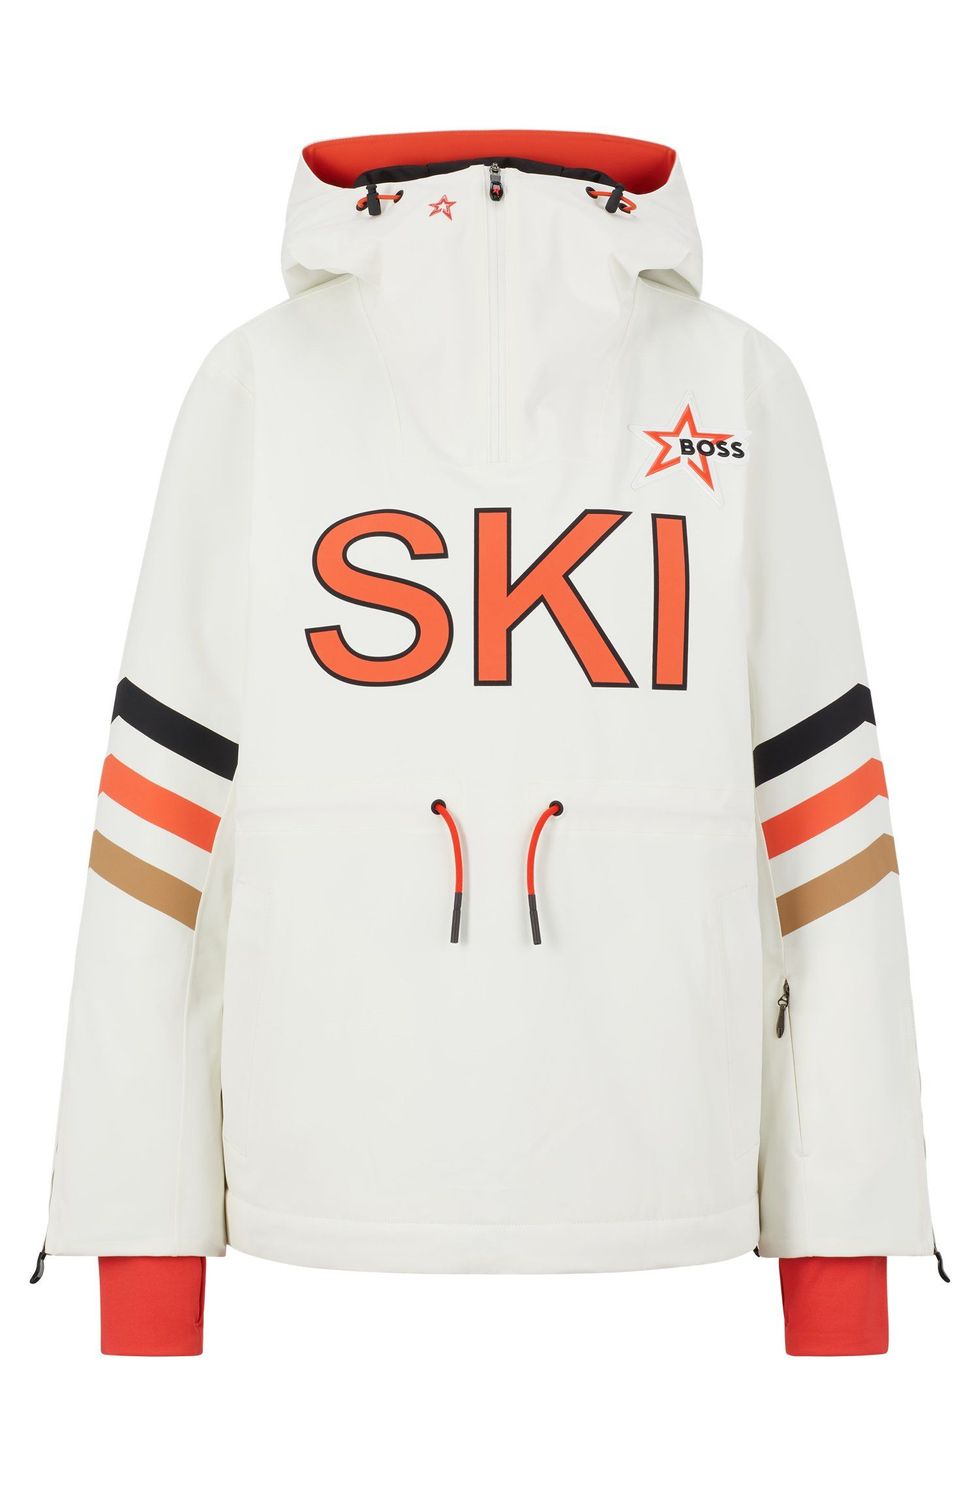 Fendi Ski wear - Lampoo